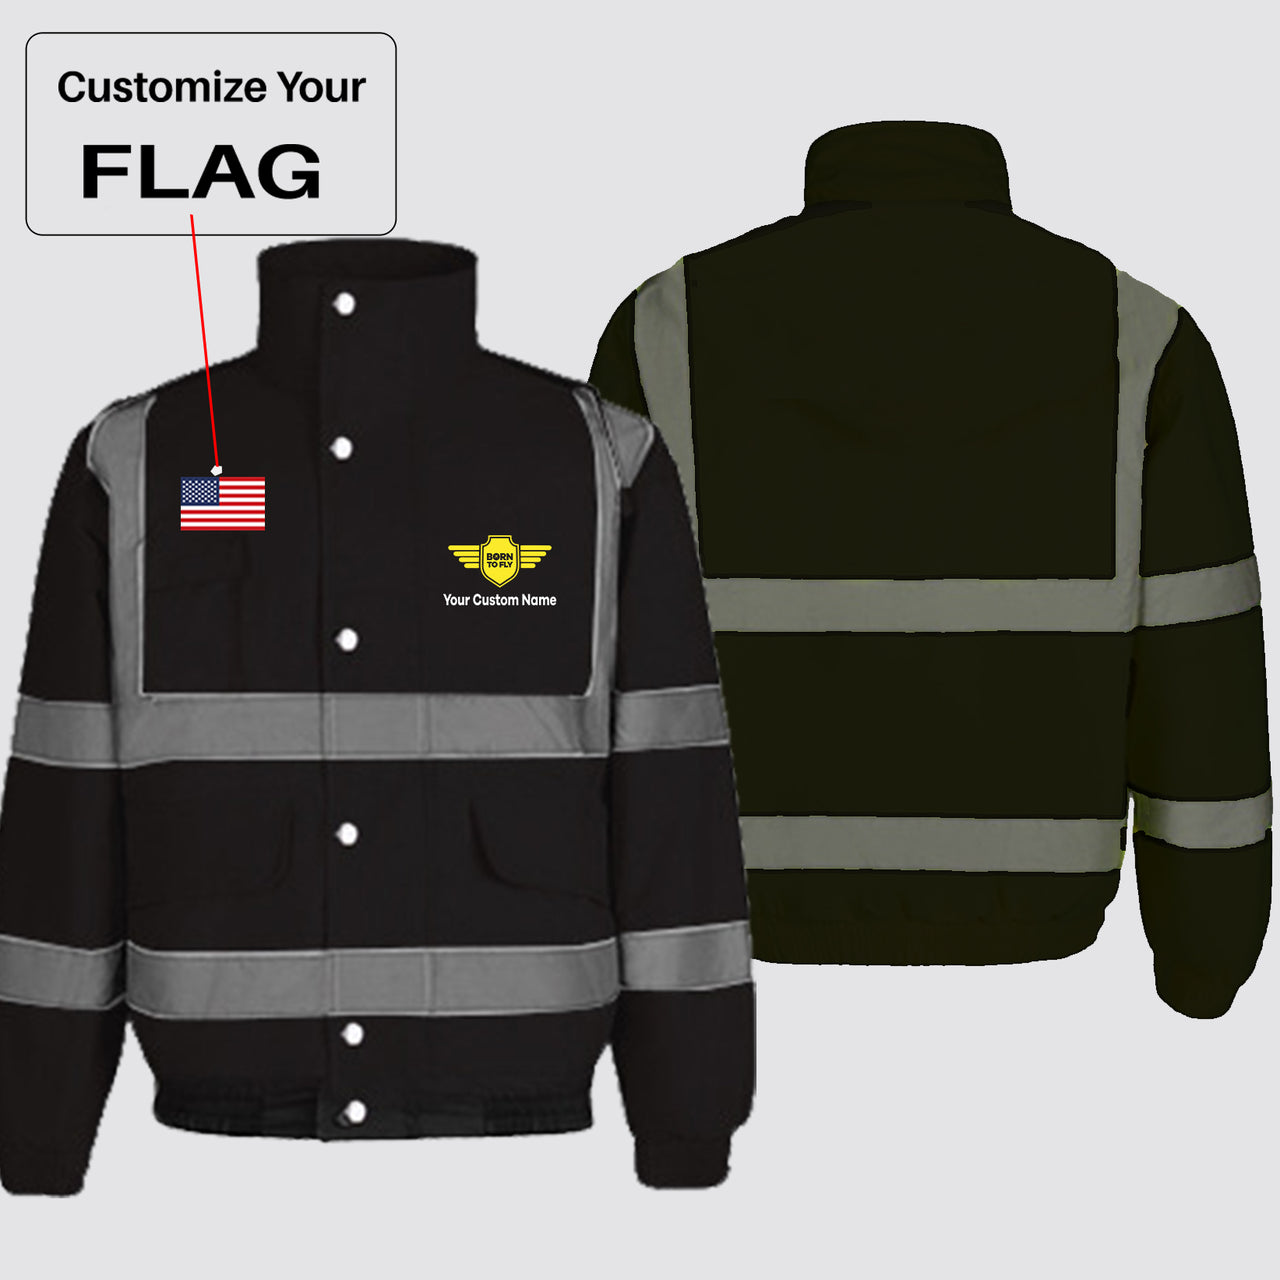 Custom Flag & Name with (Badge 5) Designed Reflective Winter Jackets